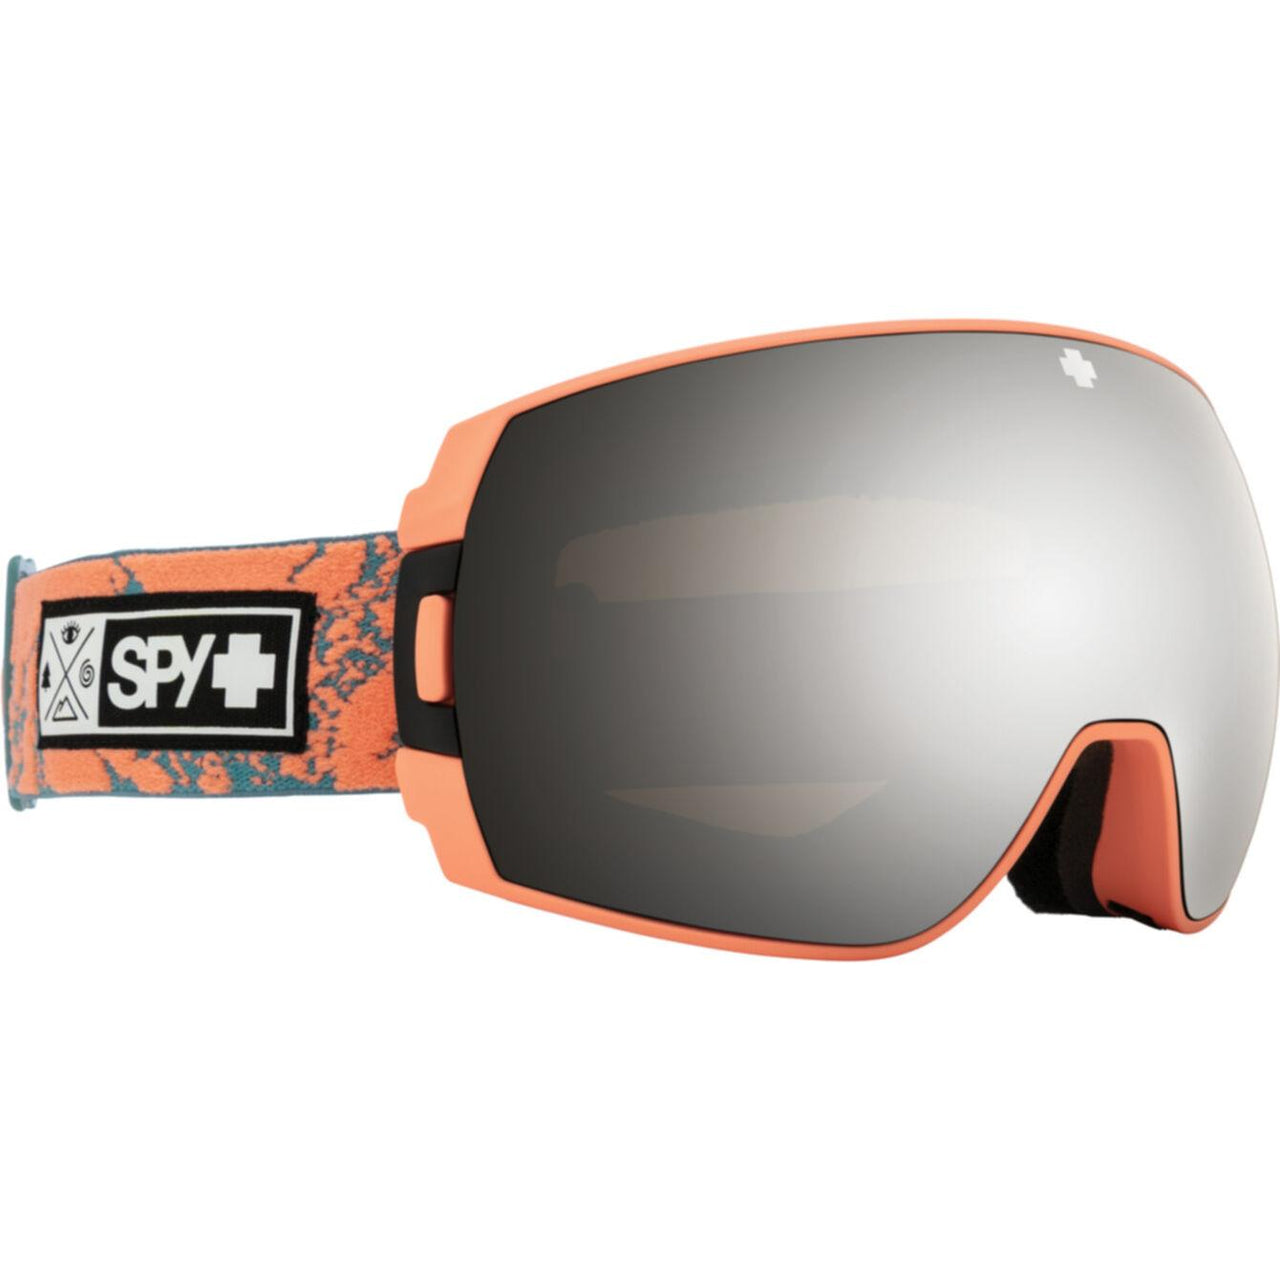 SpyOptic 310000 Goggles